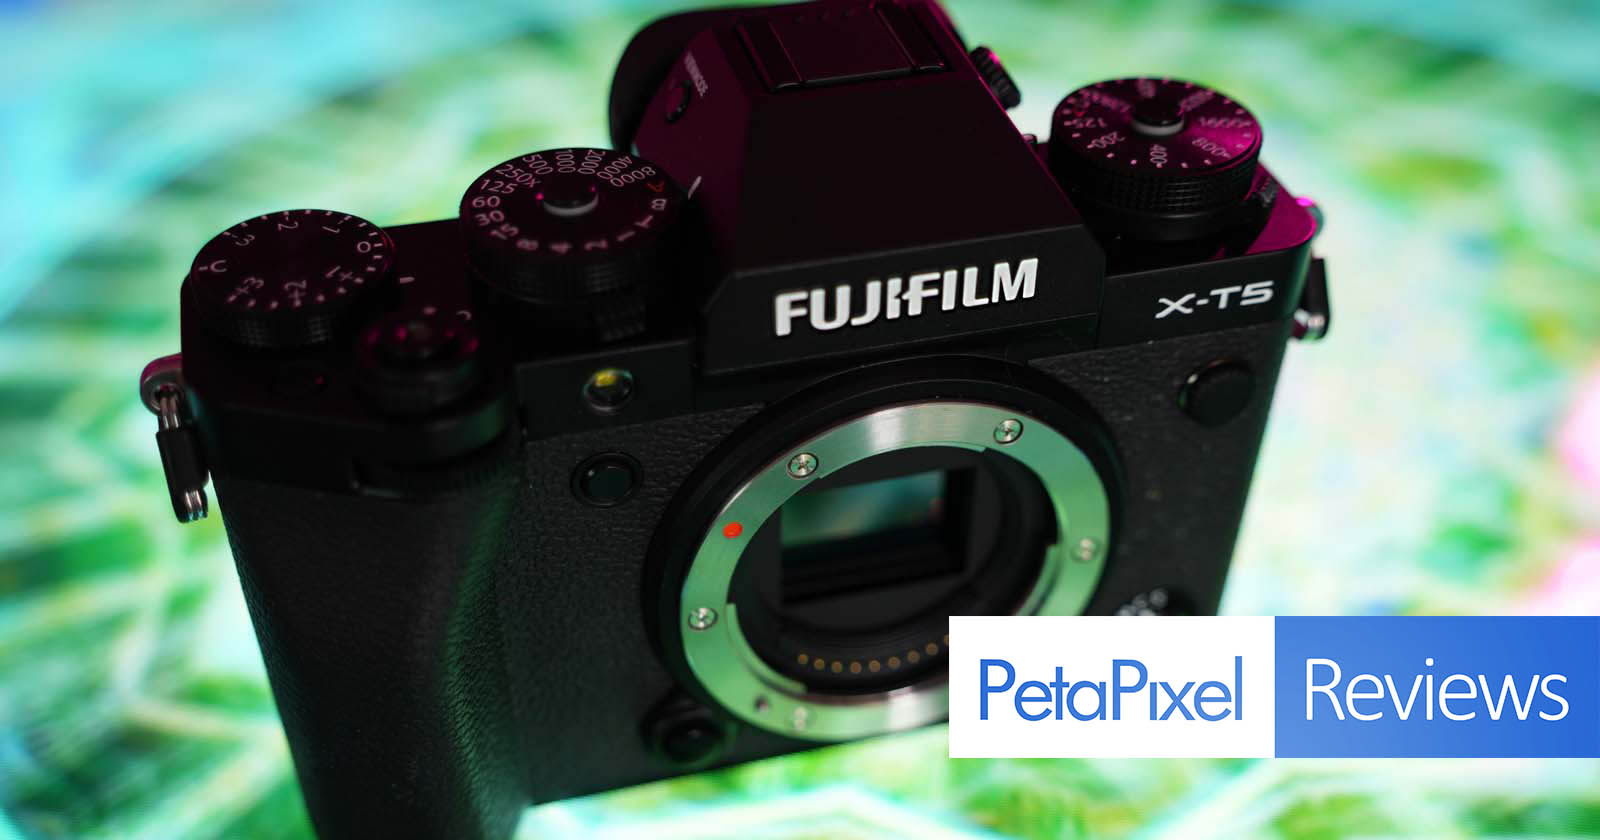 Fujifilm X-T5 review